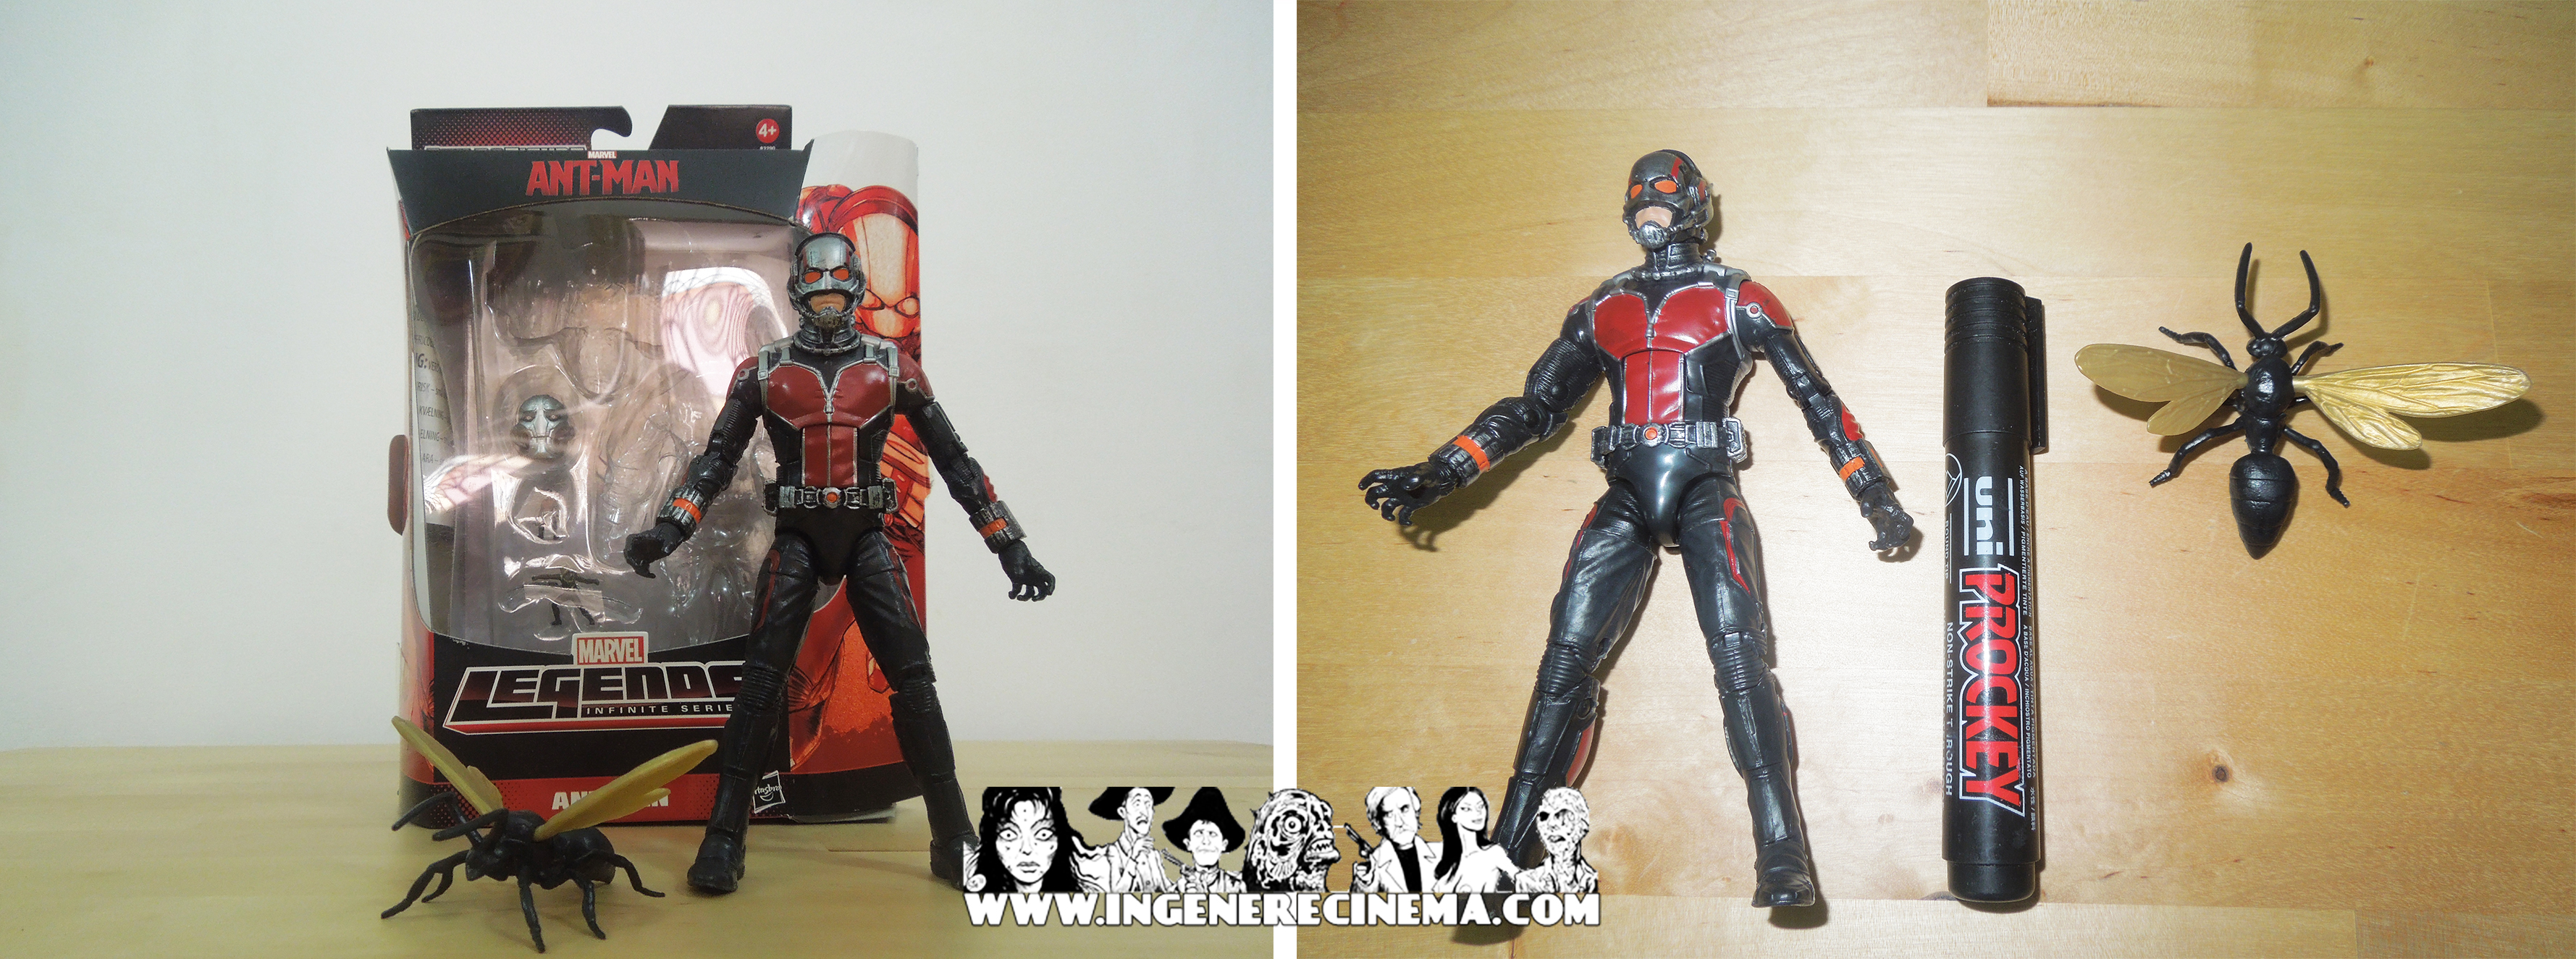 Ant-Man-Figure2